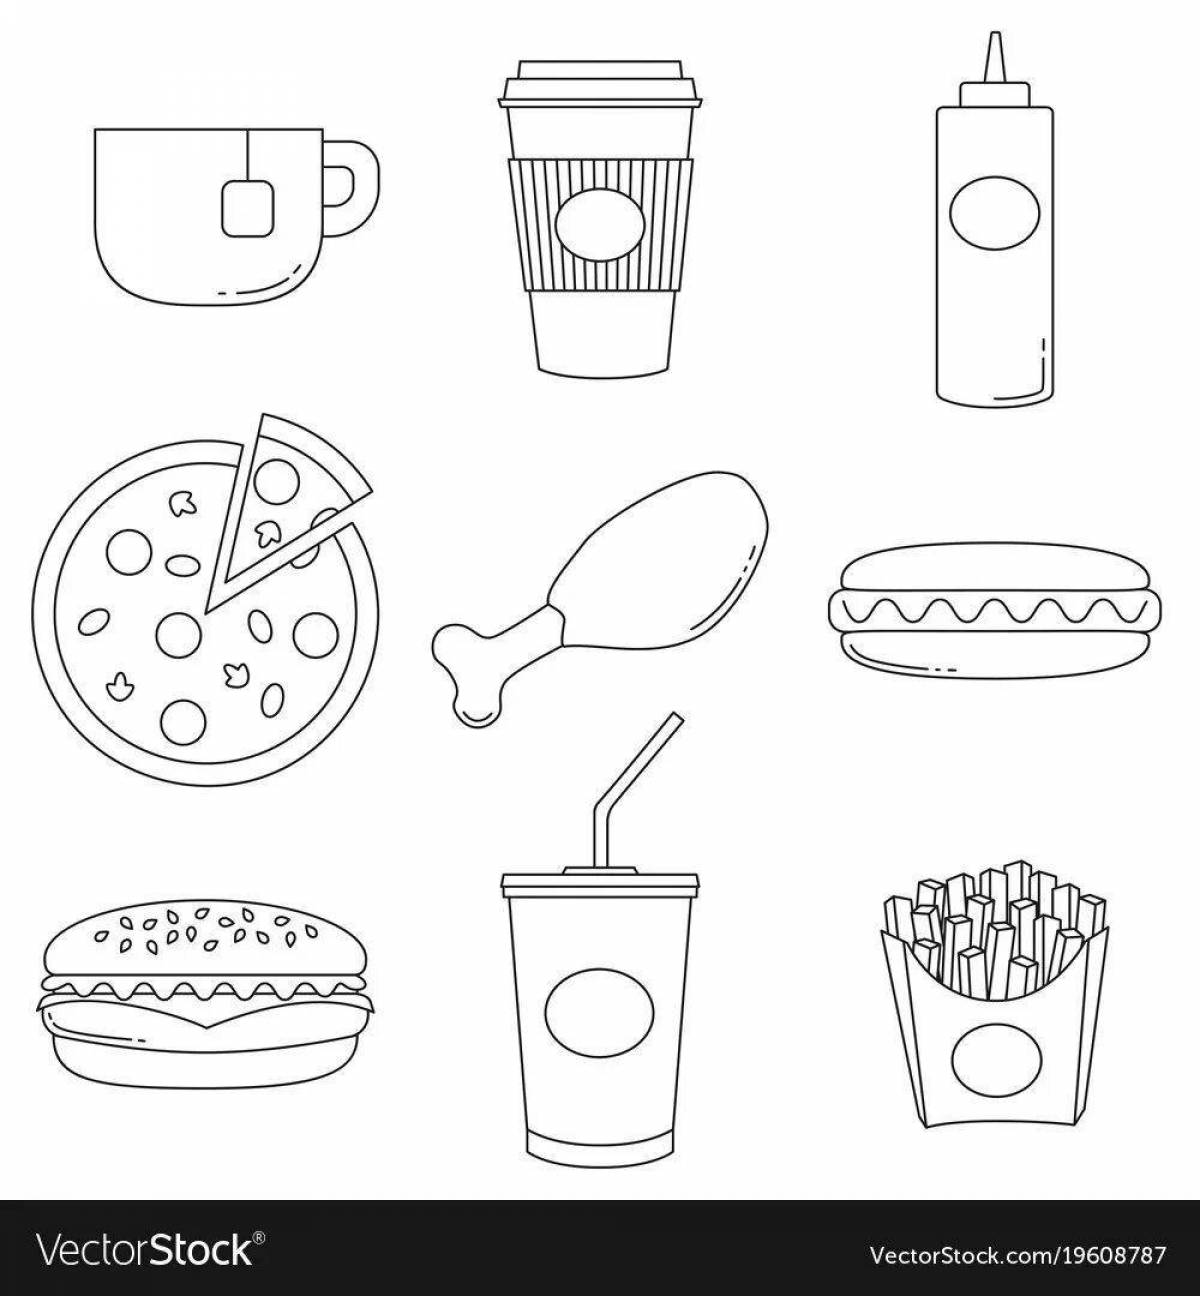 Mcdonald's delicious food coloring page